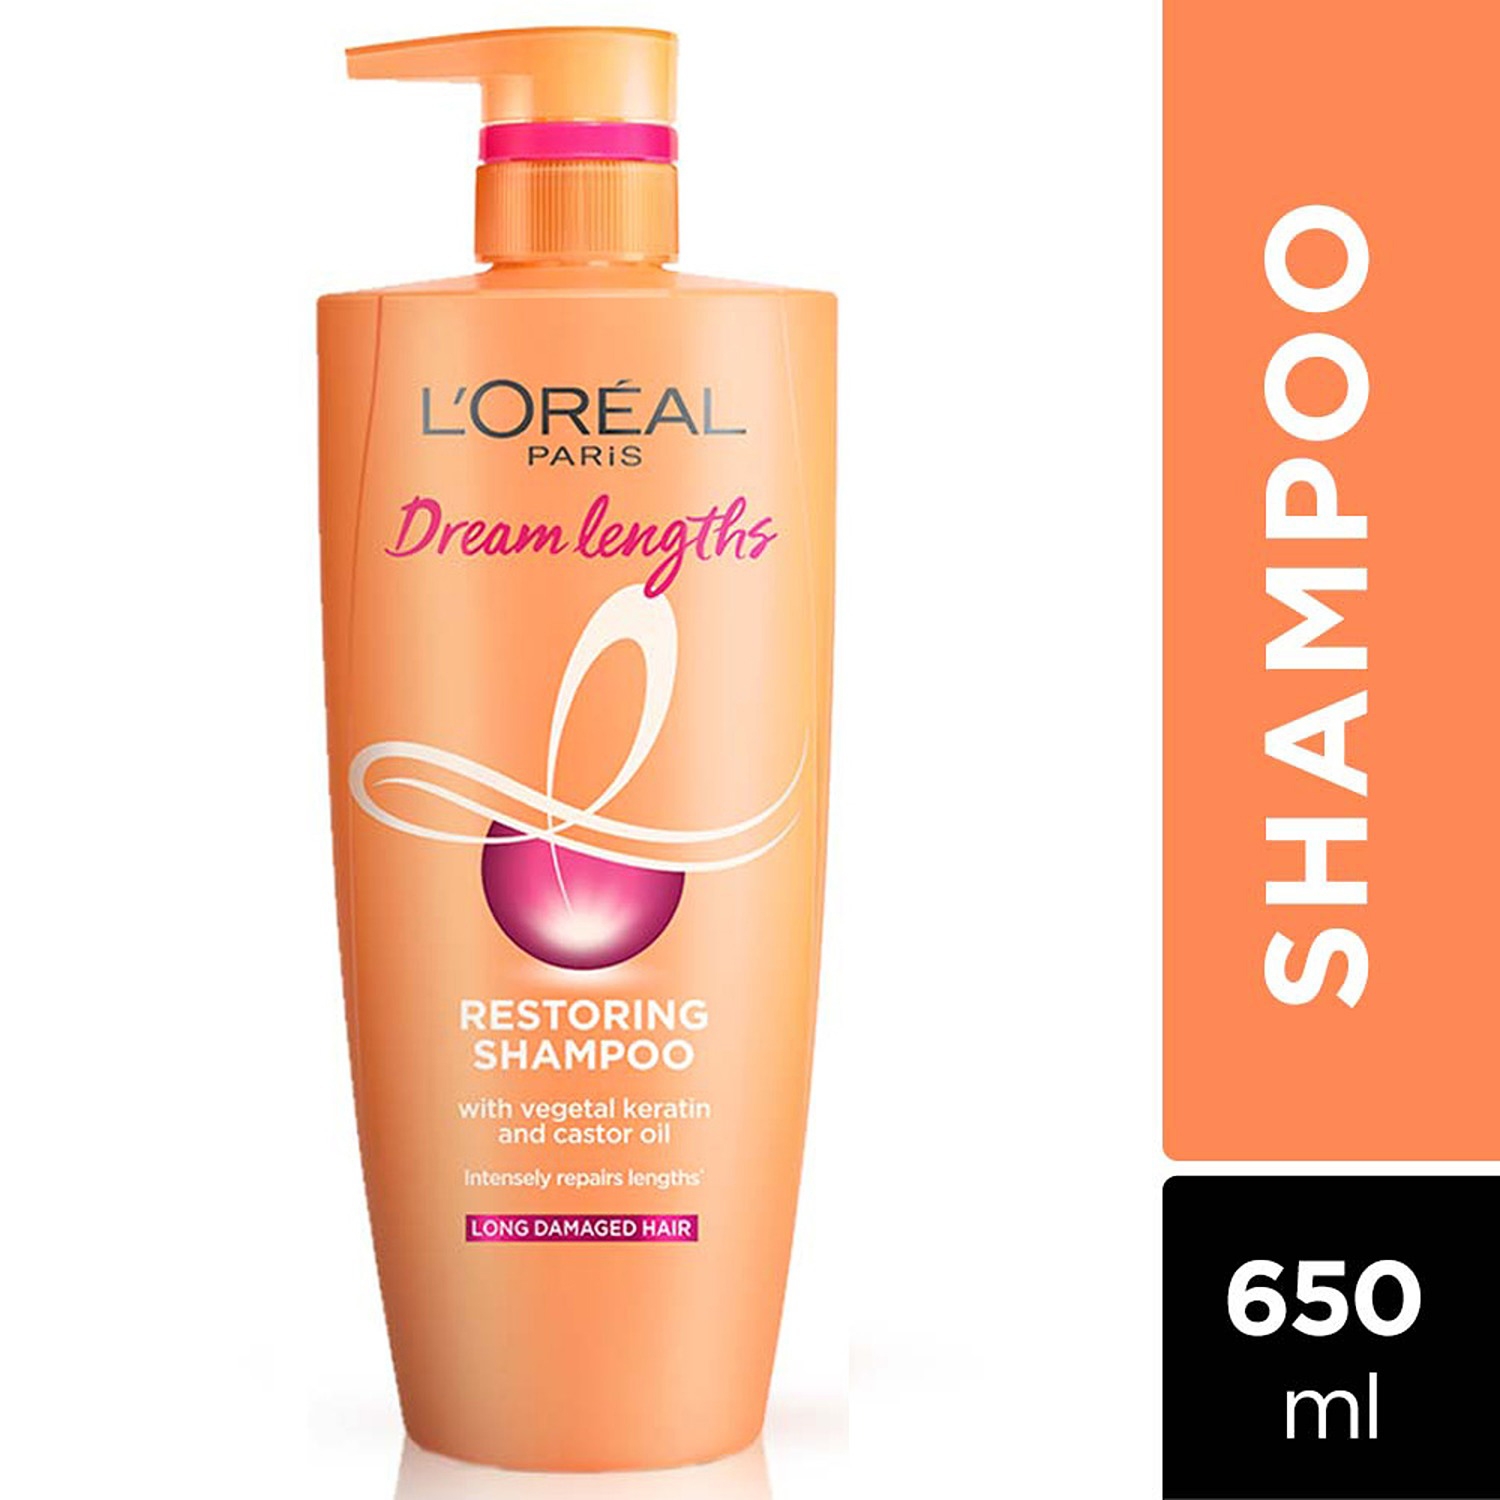 L'Oreal Paris | L'Oreal Paris Dream Lengths Shampoo (650 ml)